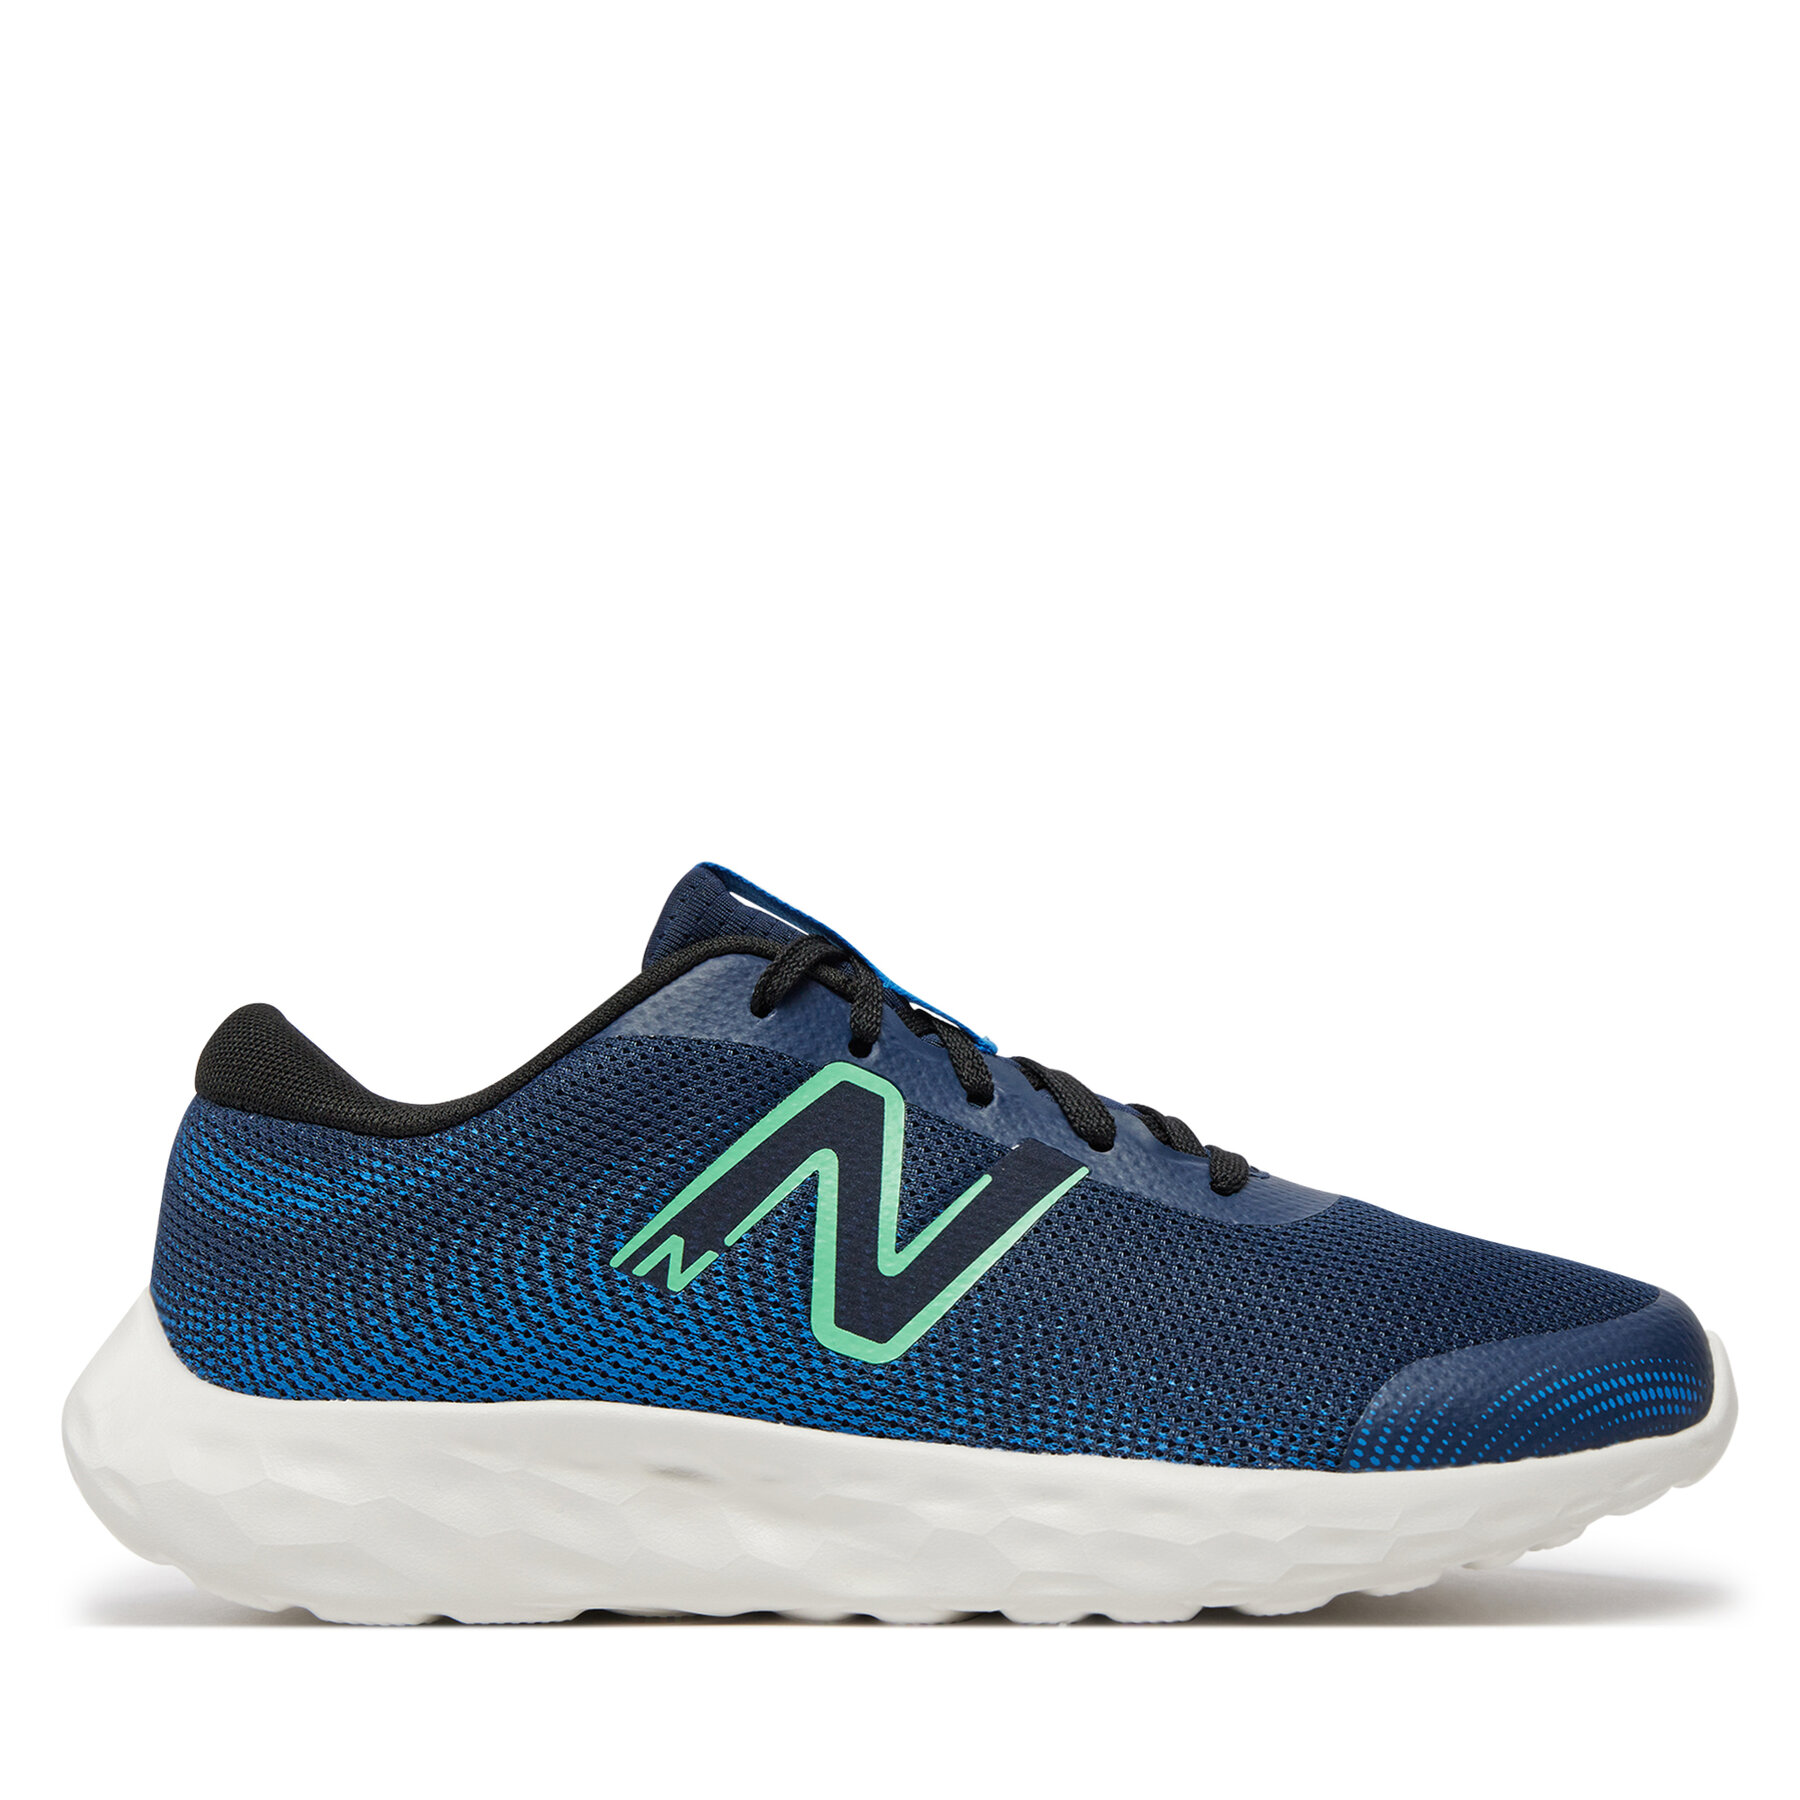 New Balance 520v8 Running Shoes blue - Calzado infantil